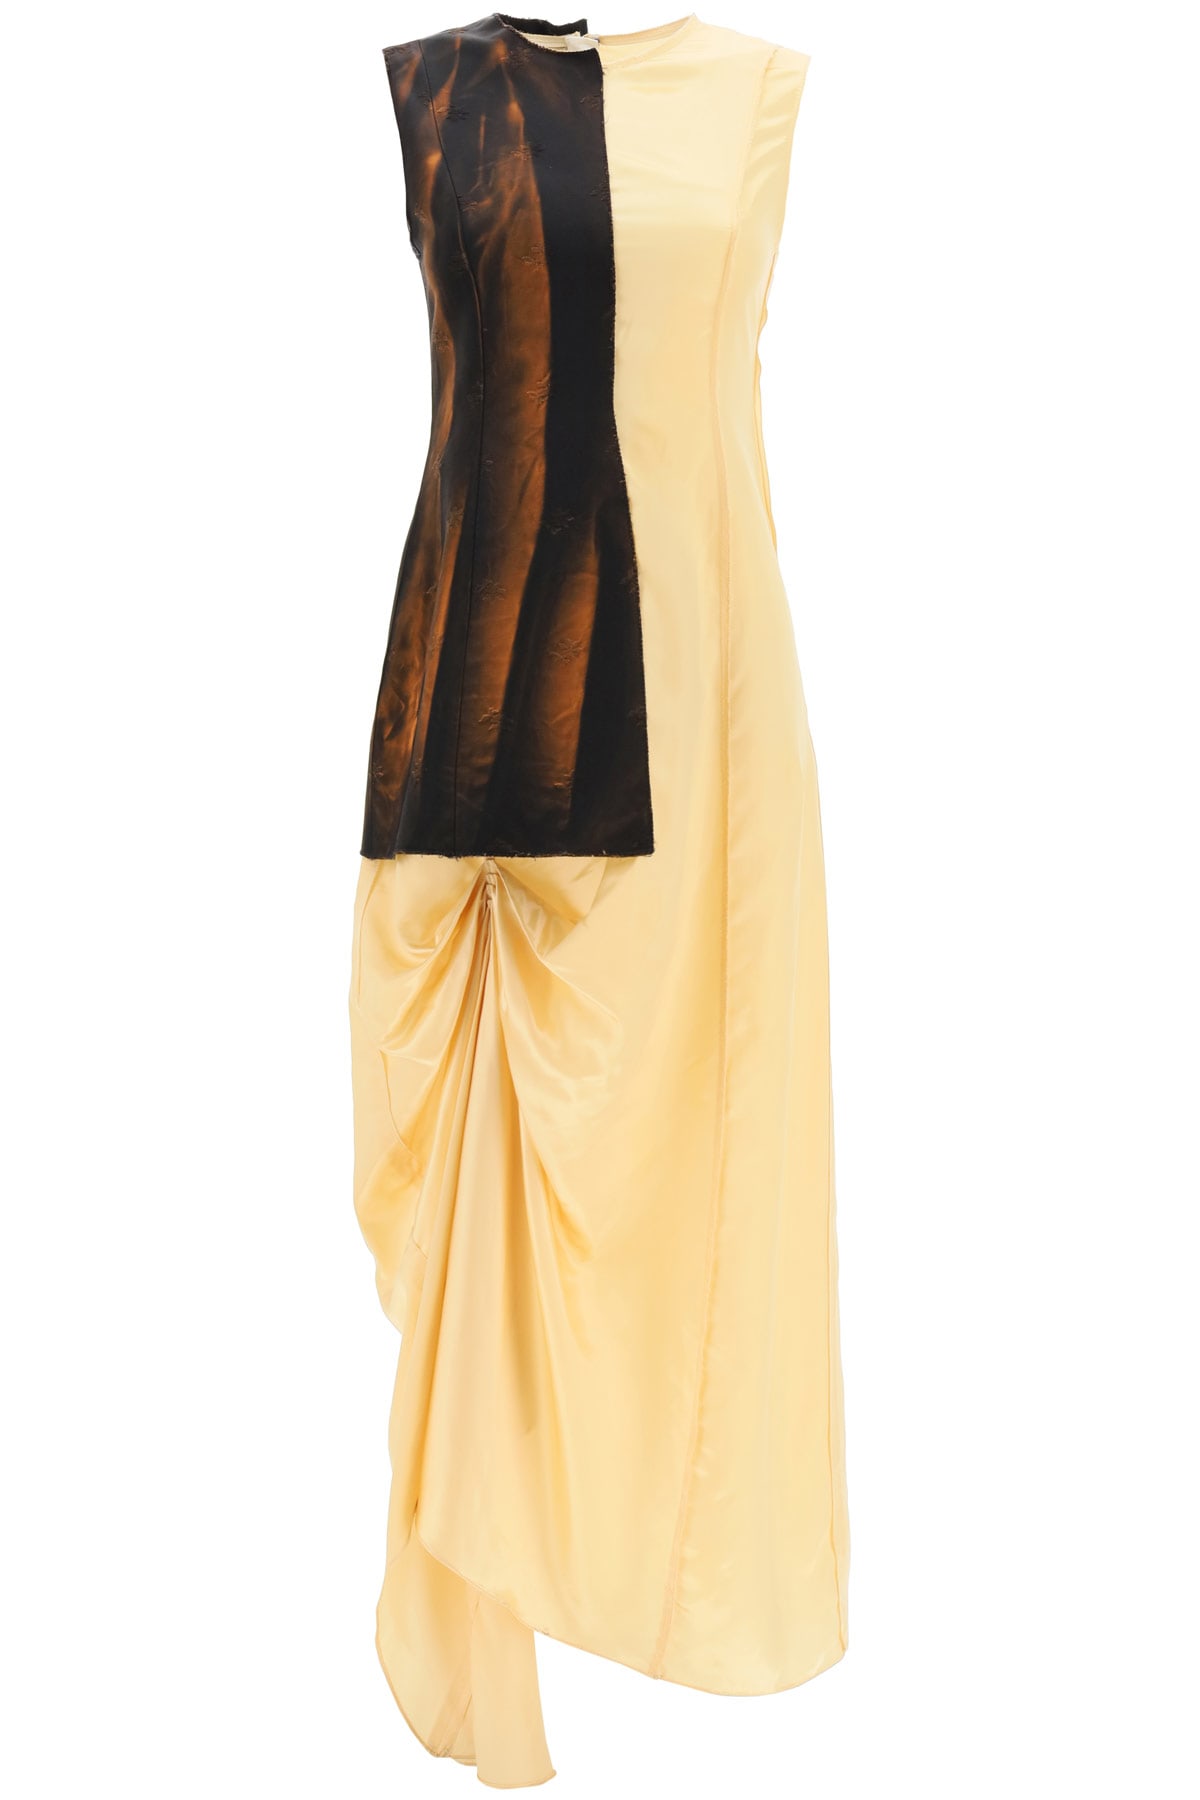 Marni Asymmetrical Dress With Draping